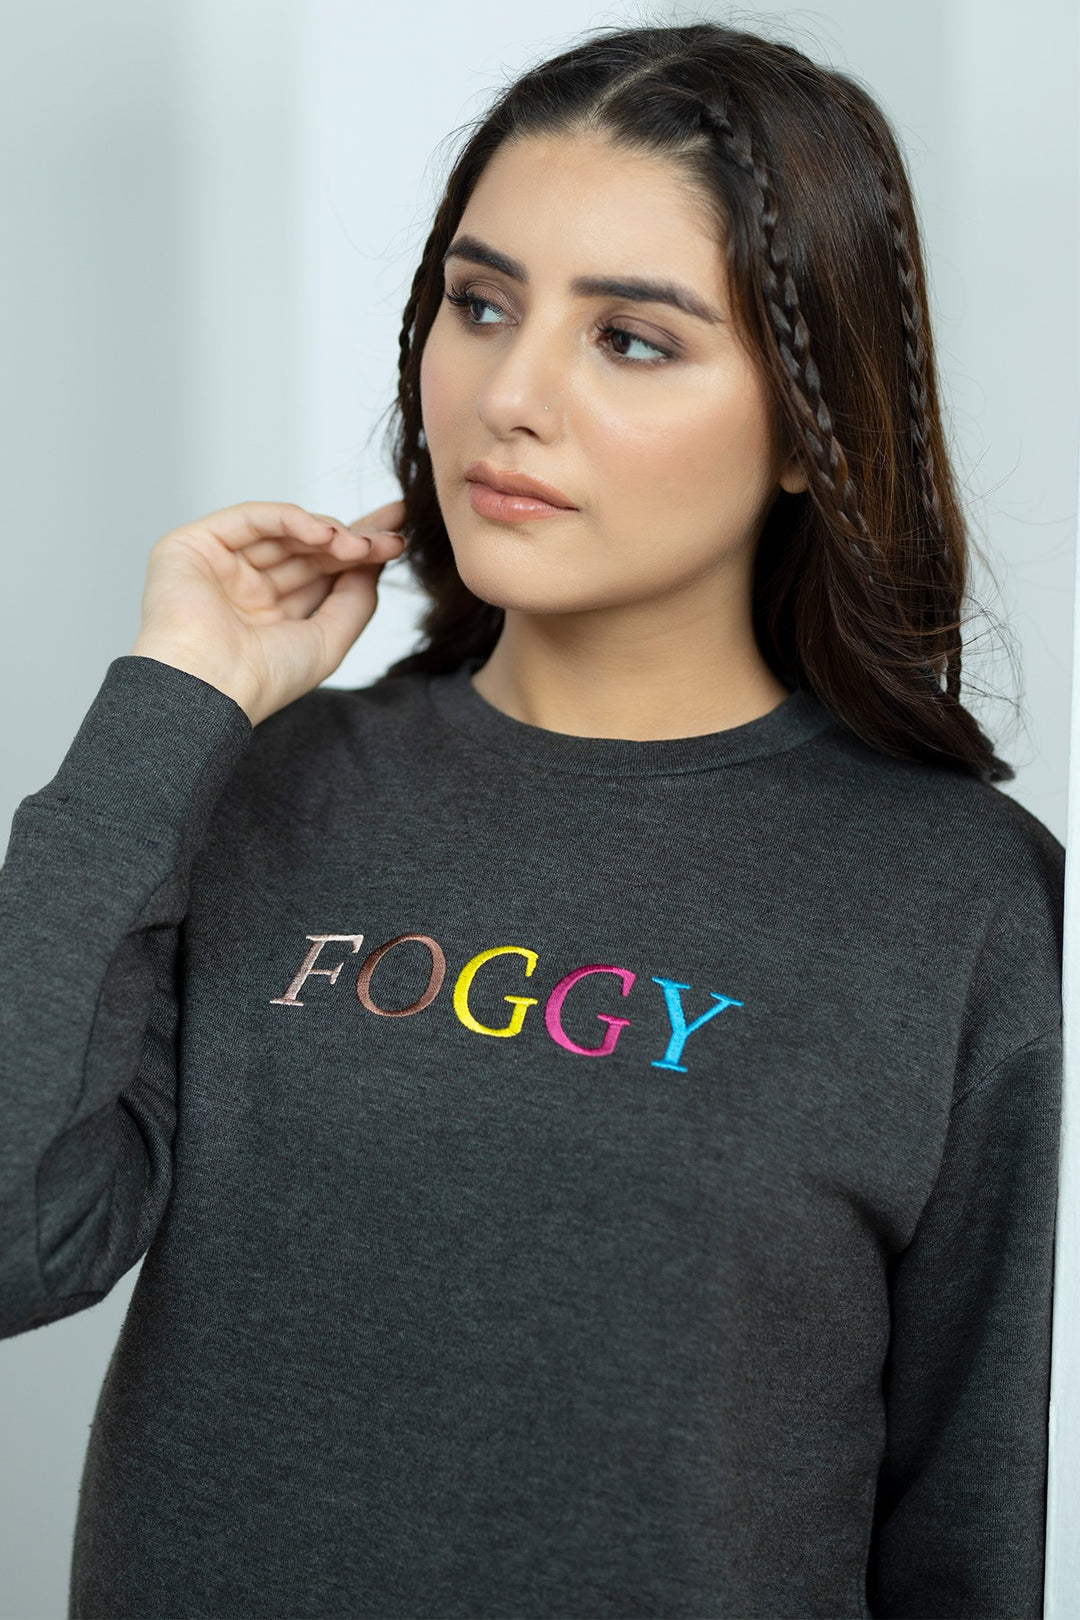 Foggy Charcoal Sweatshirt - W21 - WSW0017